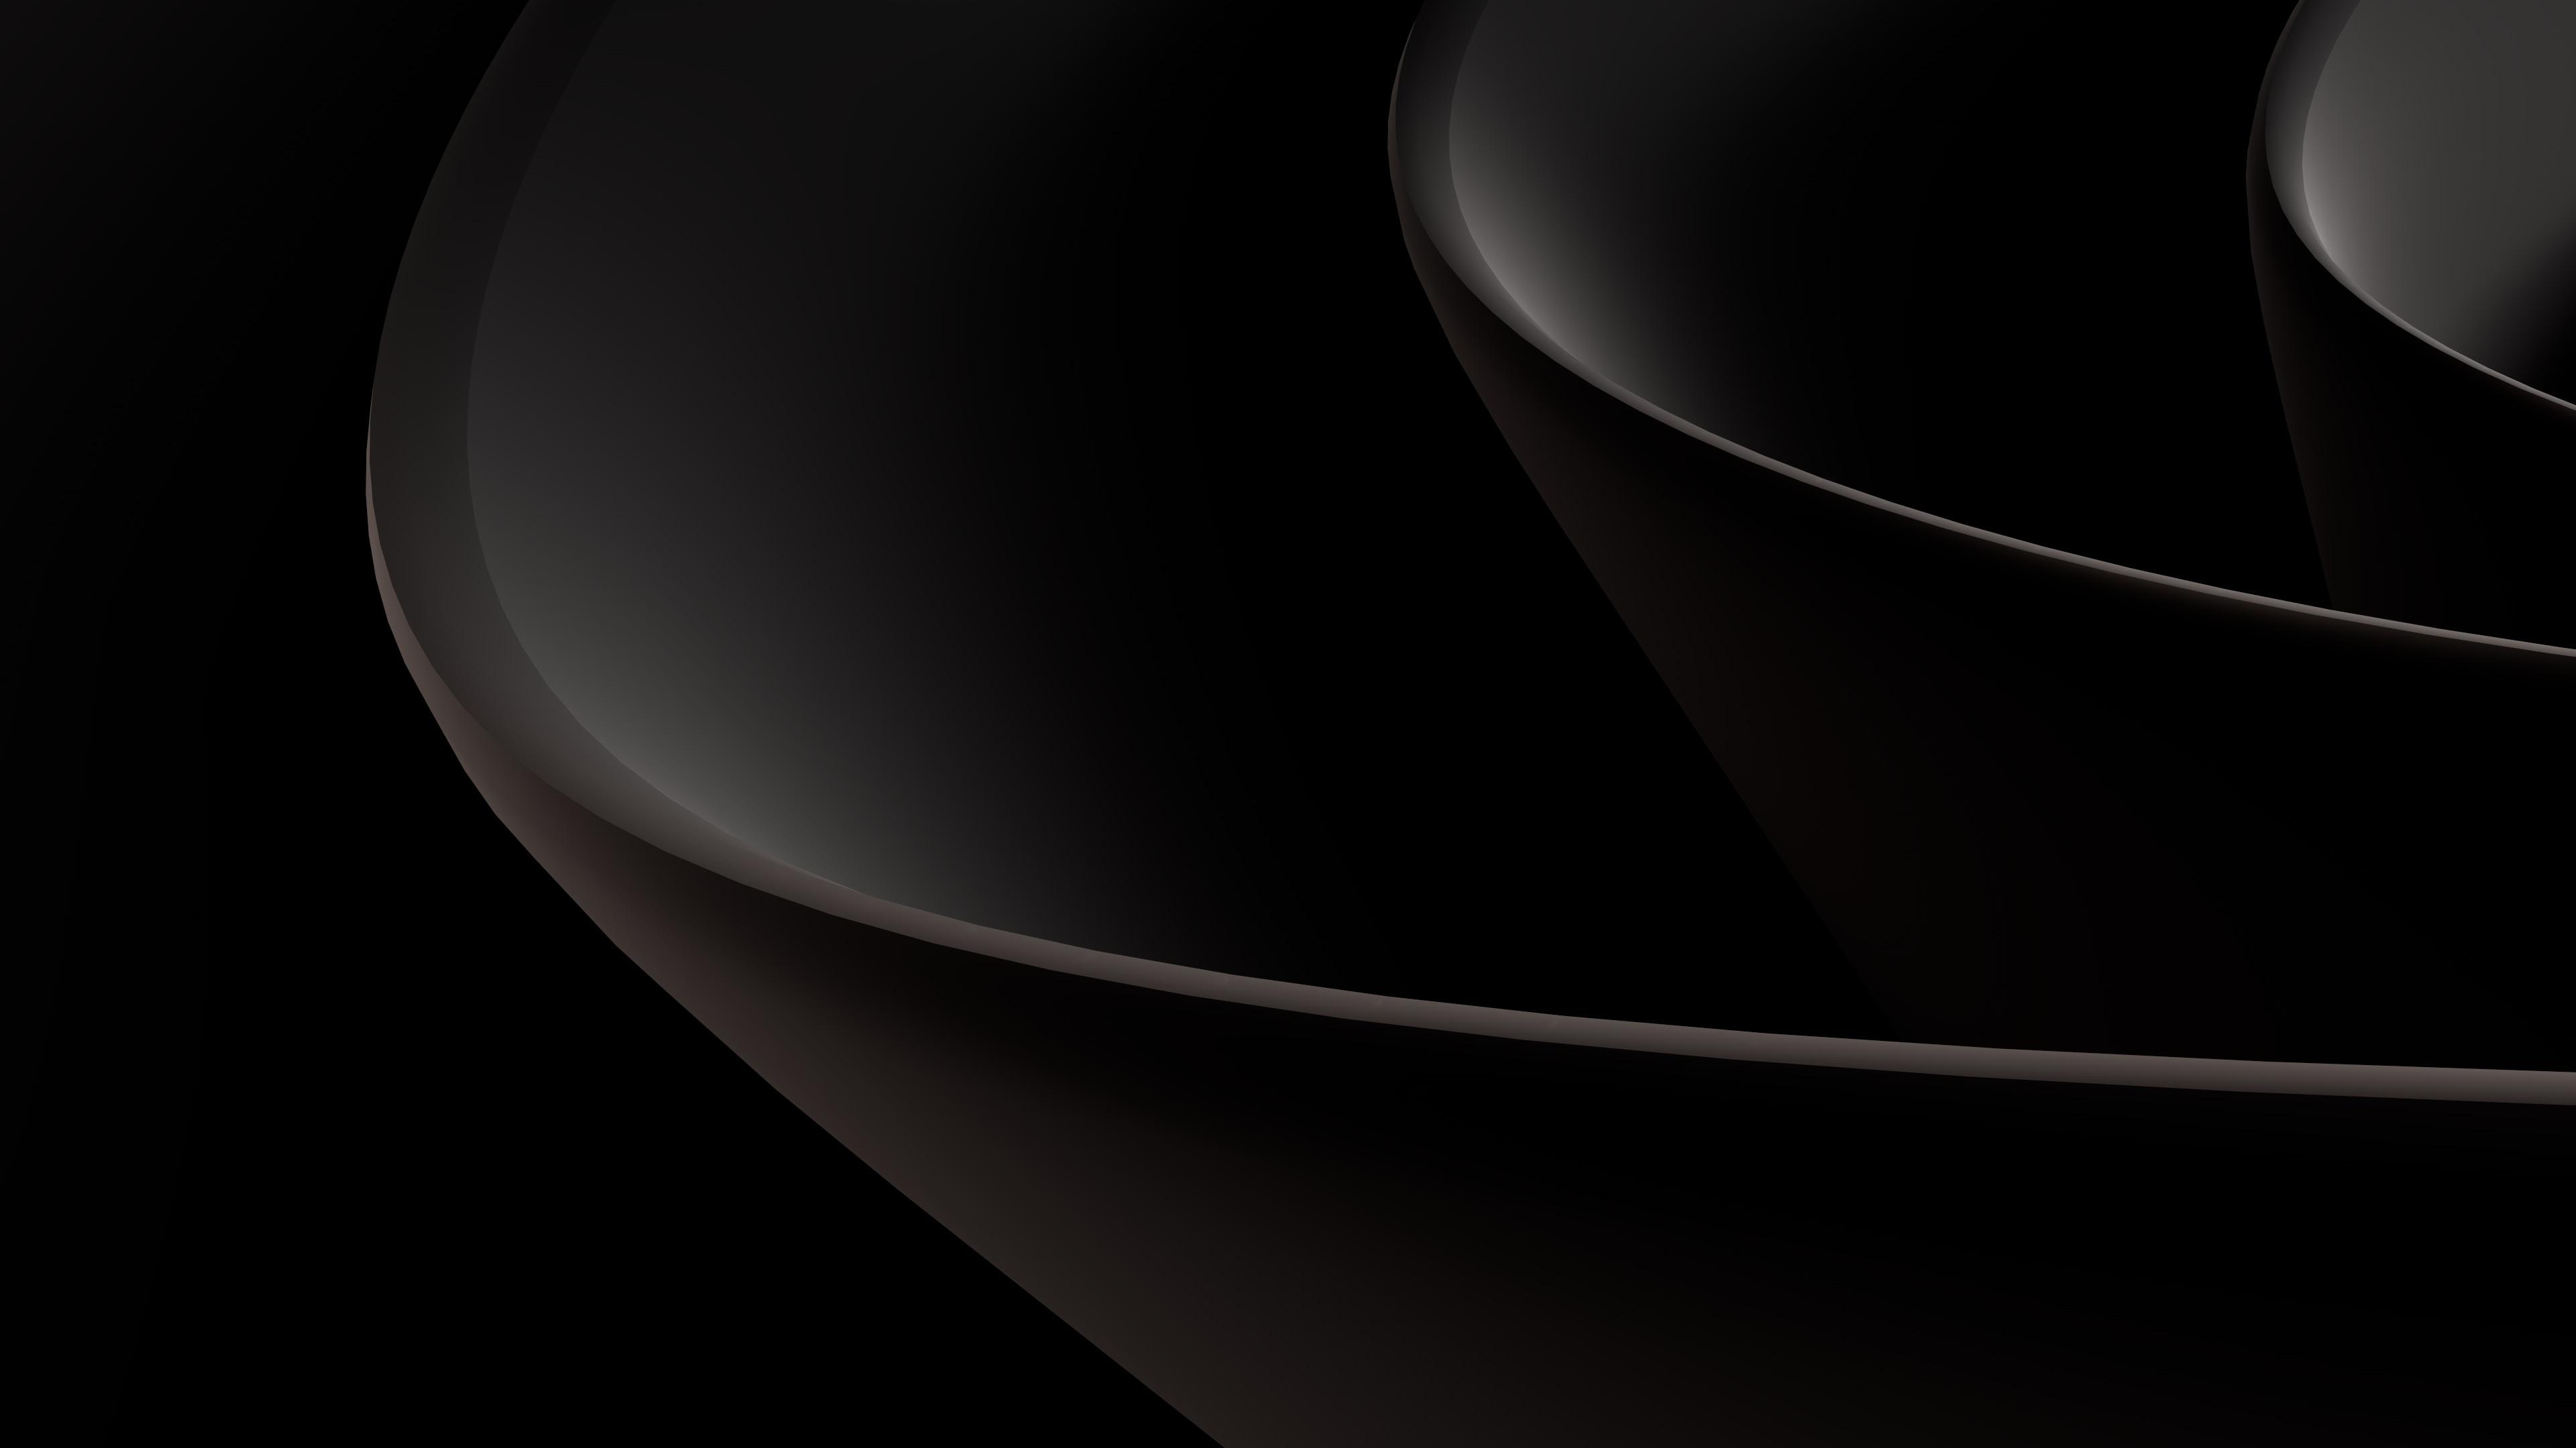 Abstract Black 4k Ultra HD Wallpaper By Andrew Kliatskyi